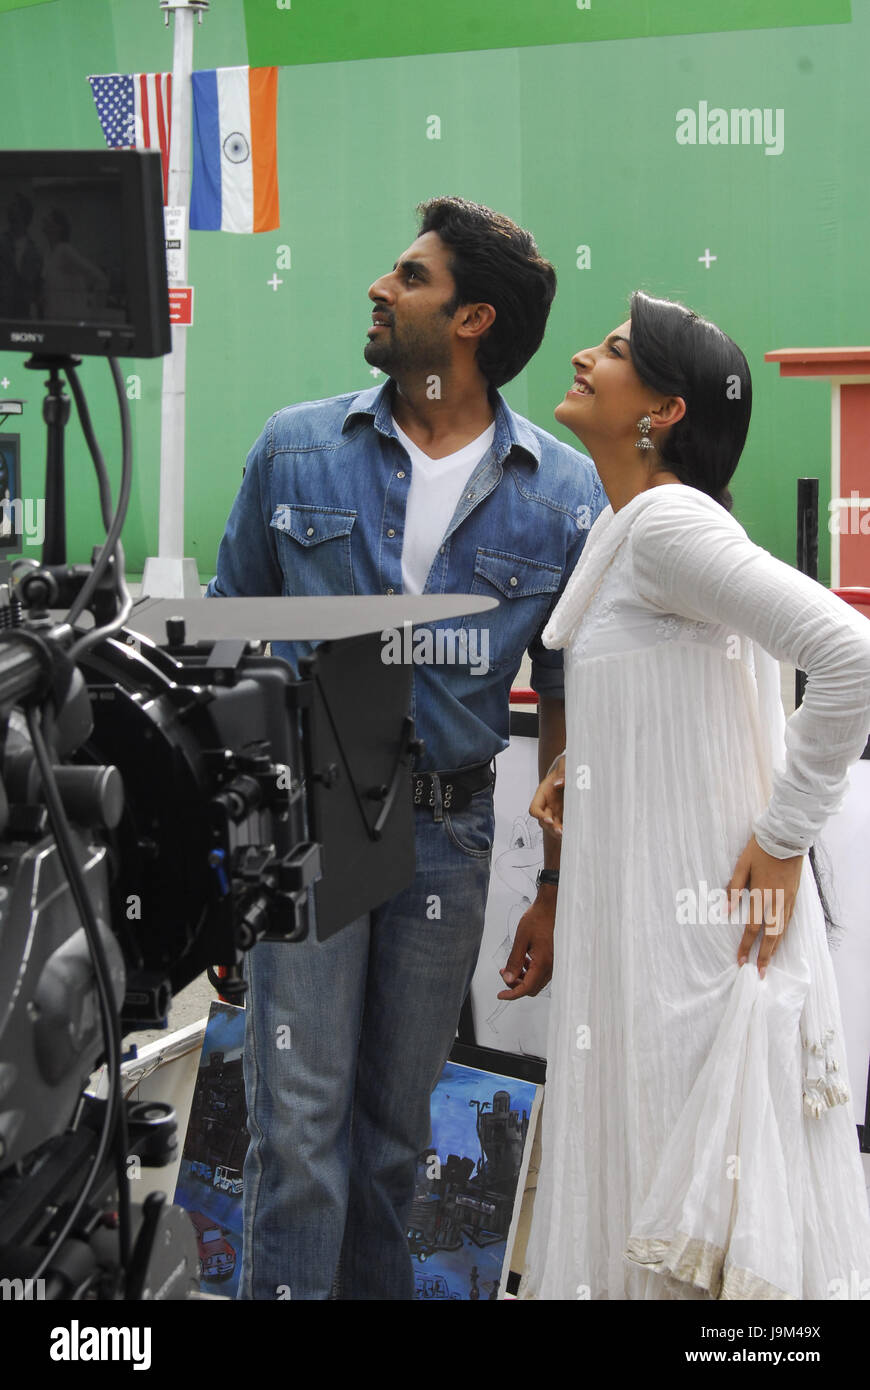 sonam kapoor and abhishek bachchan on set of movie delhi 6, India, Asia, NOMR Stock Photo